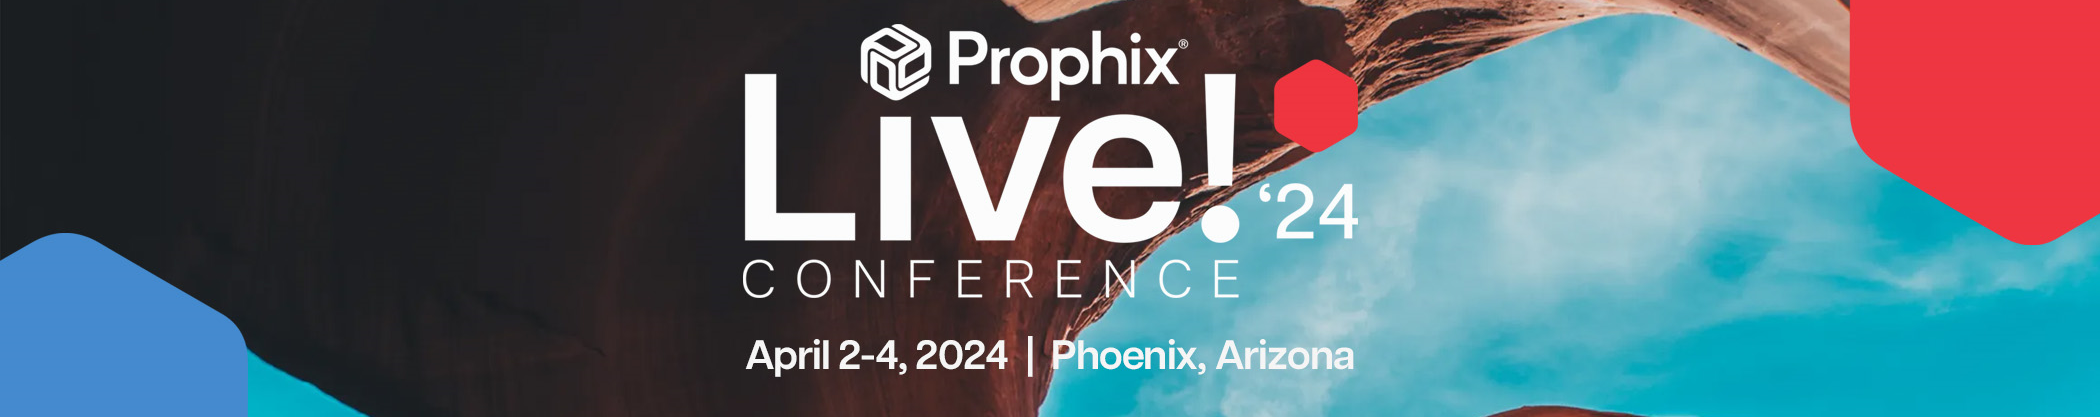  Prophix Live!'24 Conference